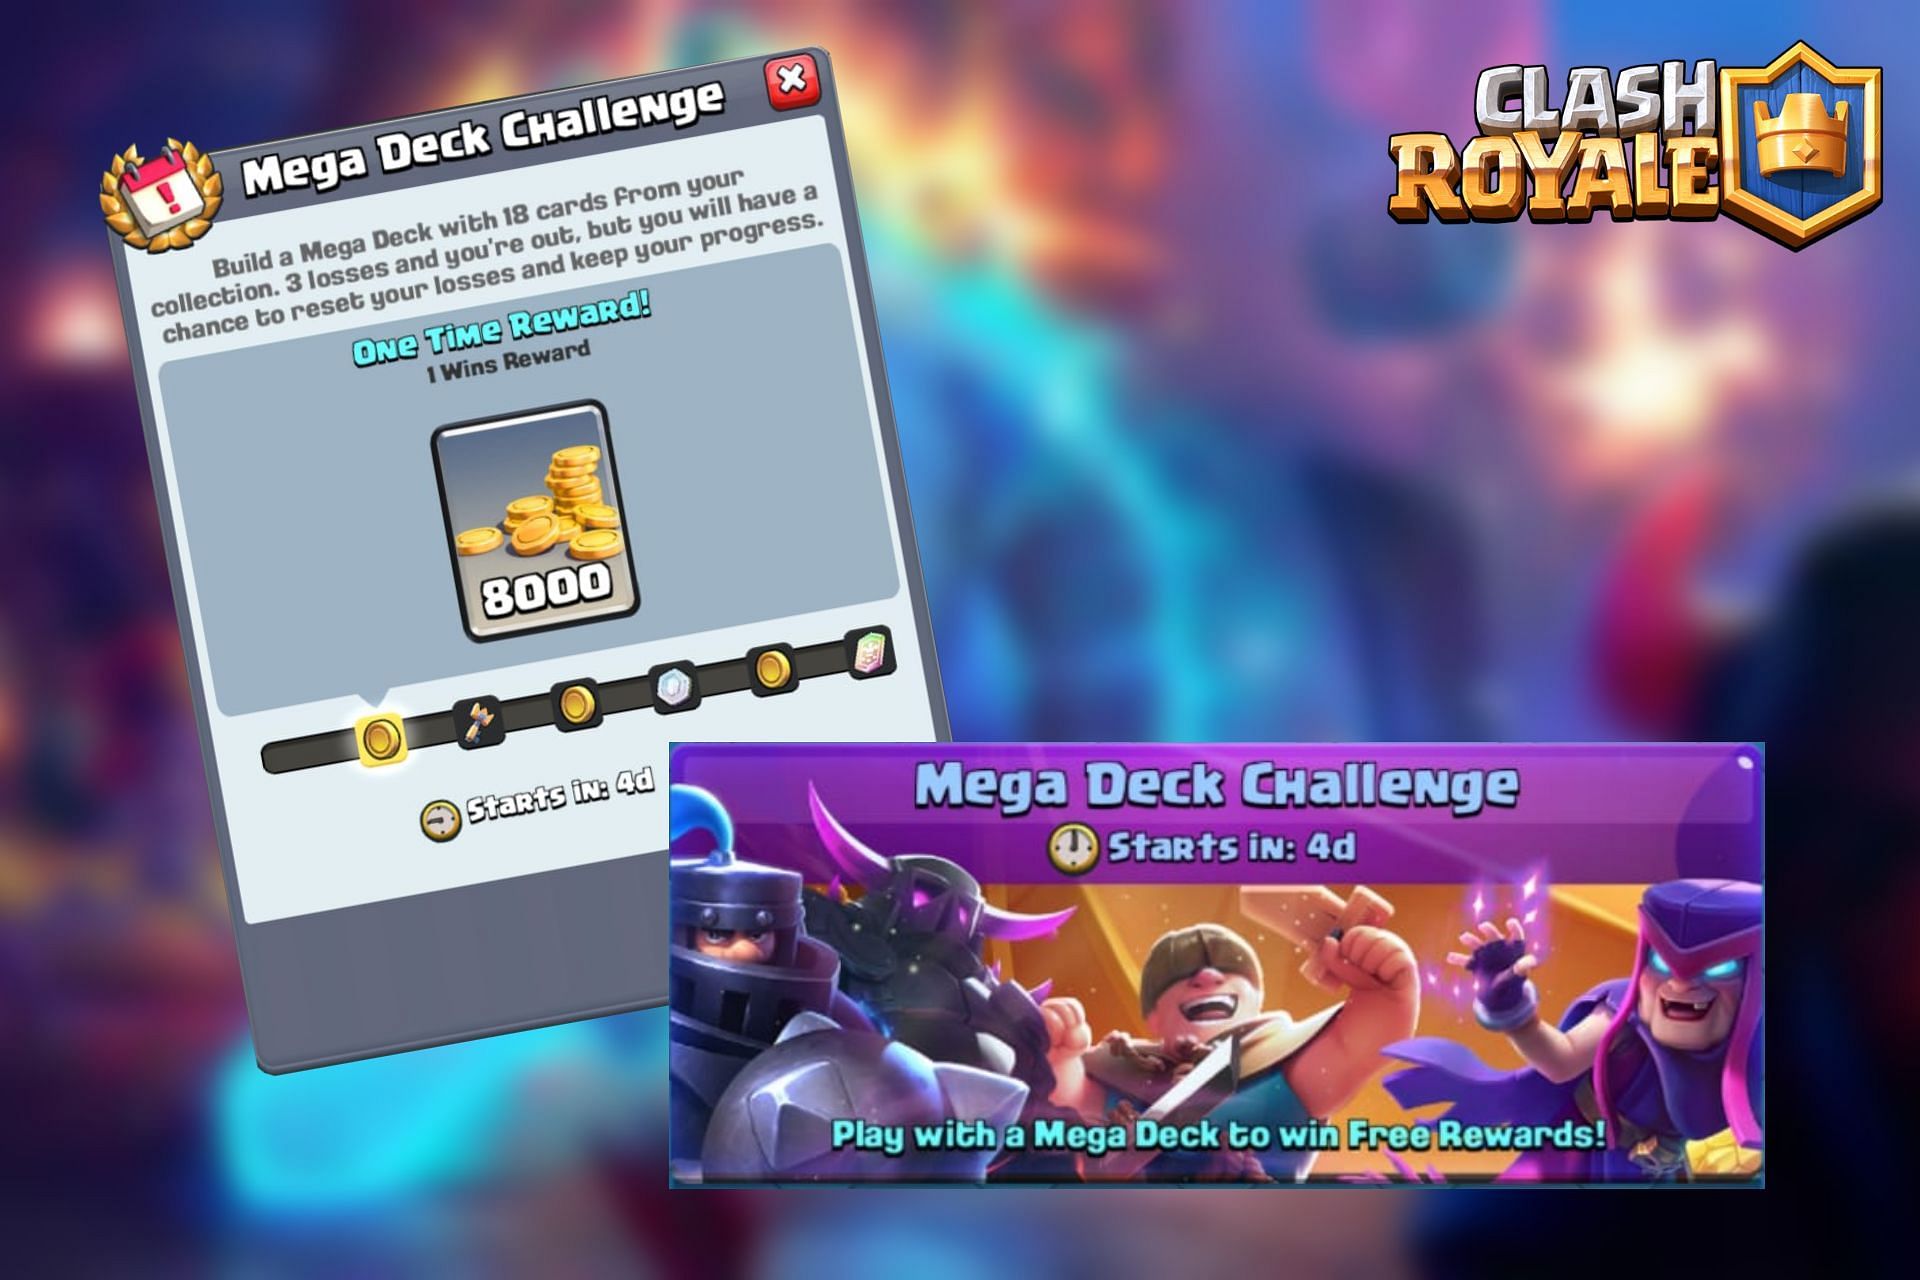 January's Mega Draft Challenge in Clash Royale: Information